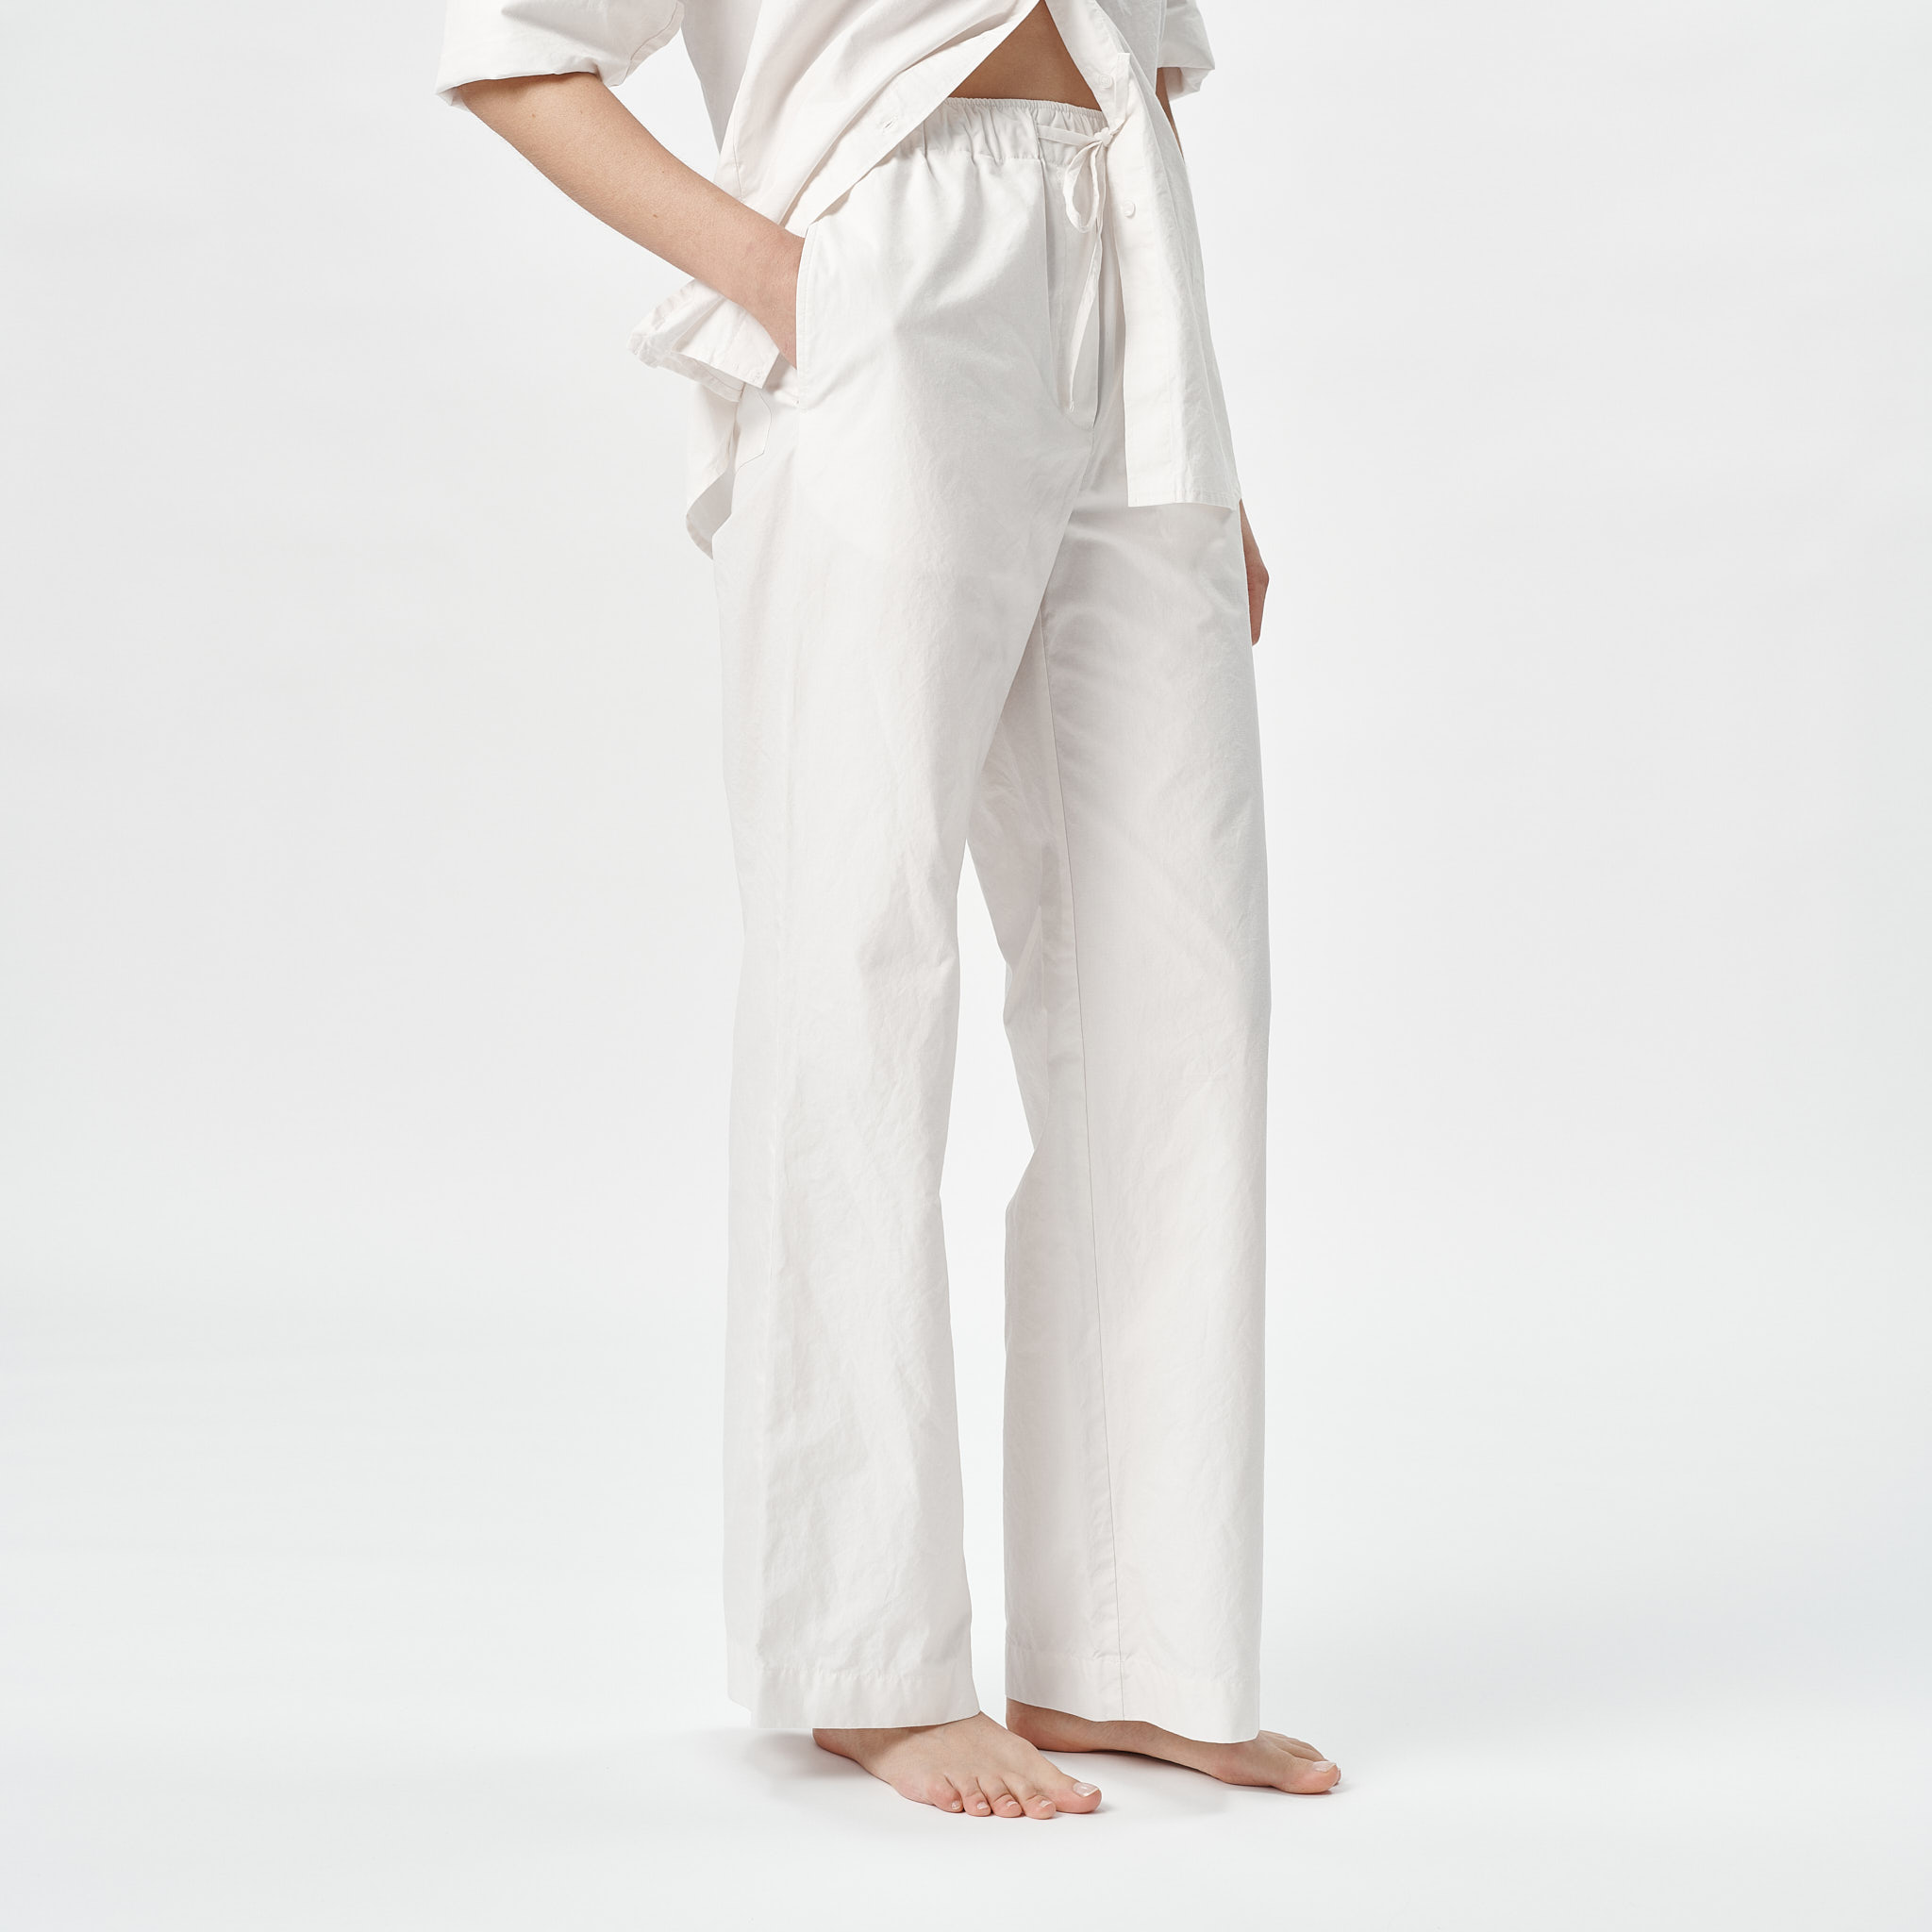 Pyjama Combo with shirt, pants and shorts